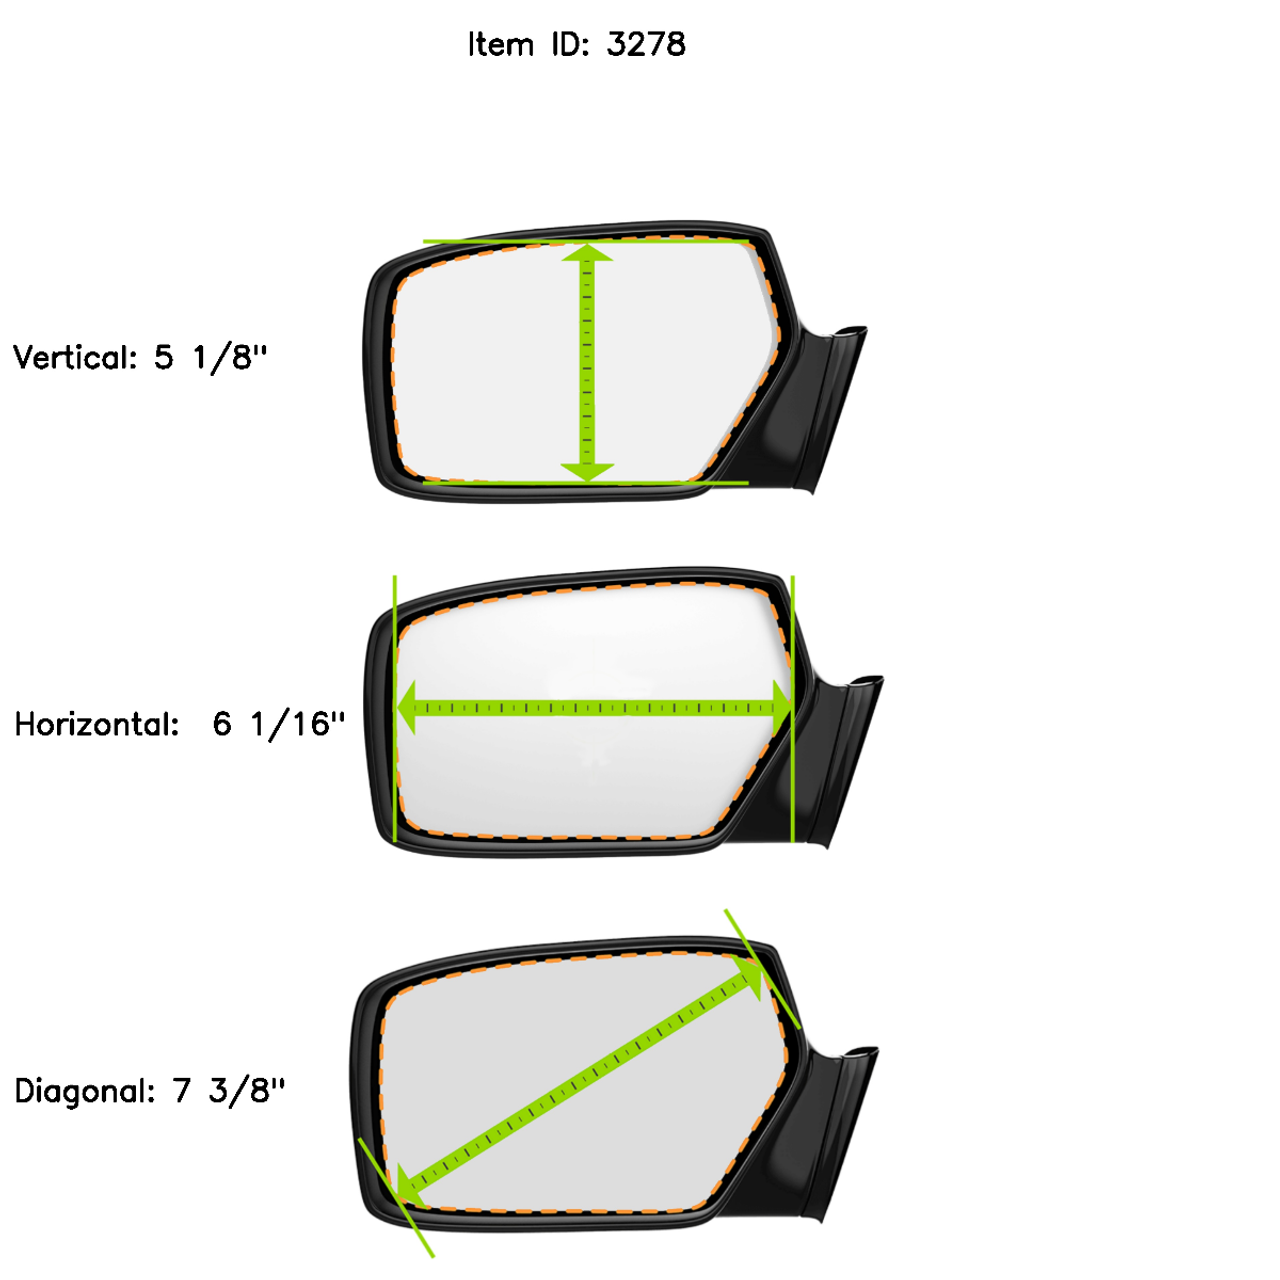 93-05 Ranger, 94-05 Mazda B2300, B2500, B3000, B4000 Right Passenger Manual Mirror Glass Lens w/Adhesive USA Models w/non folding type